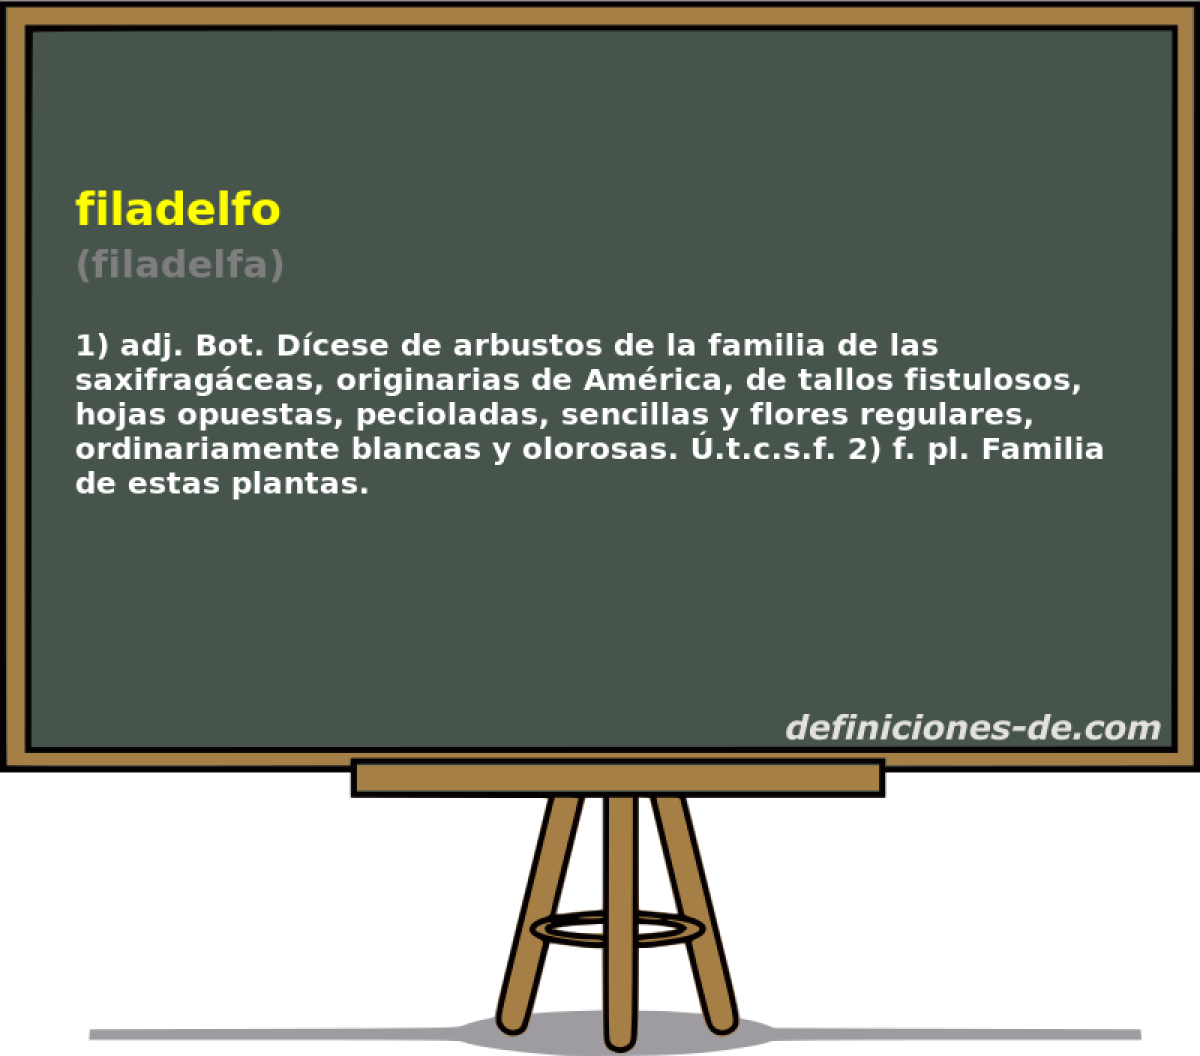 filadelfo (filadelfa)